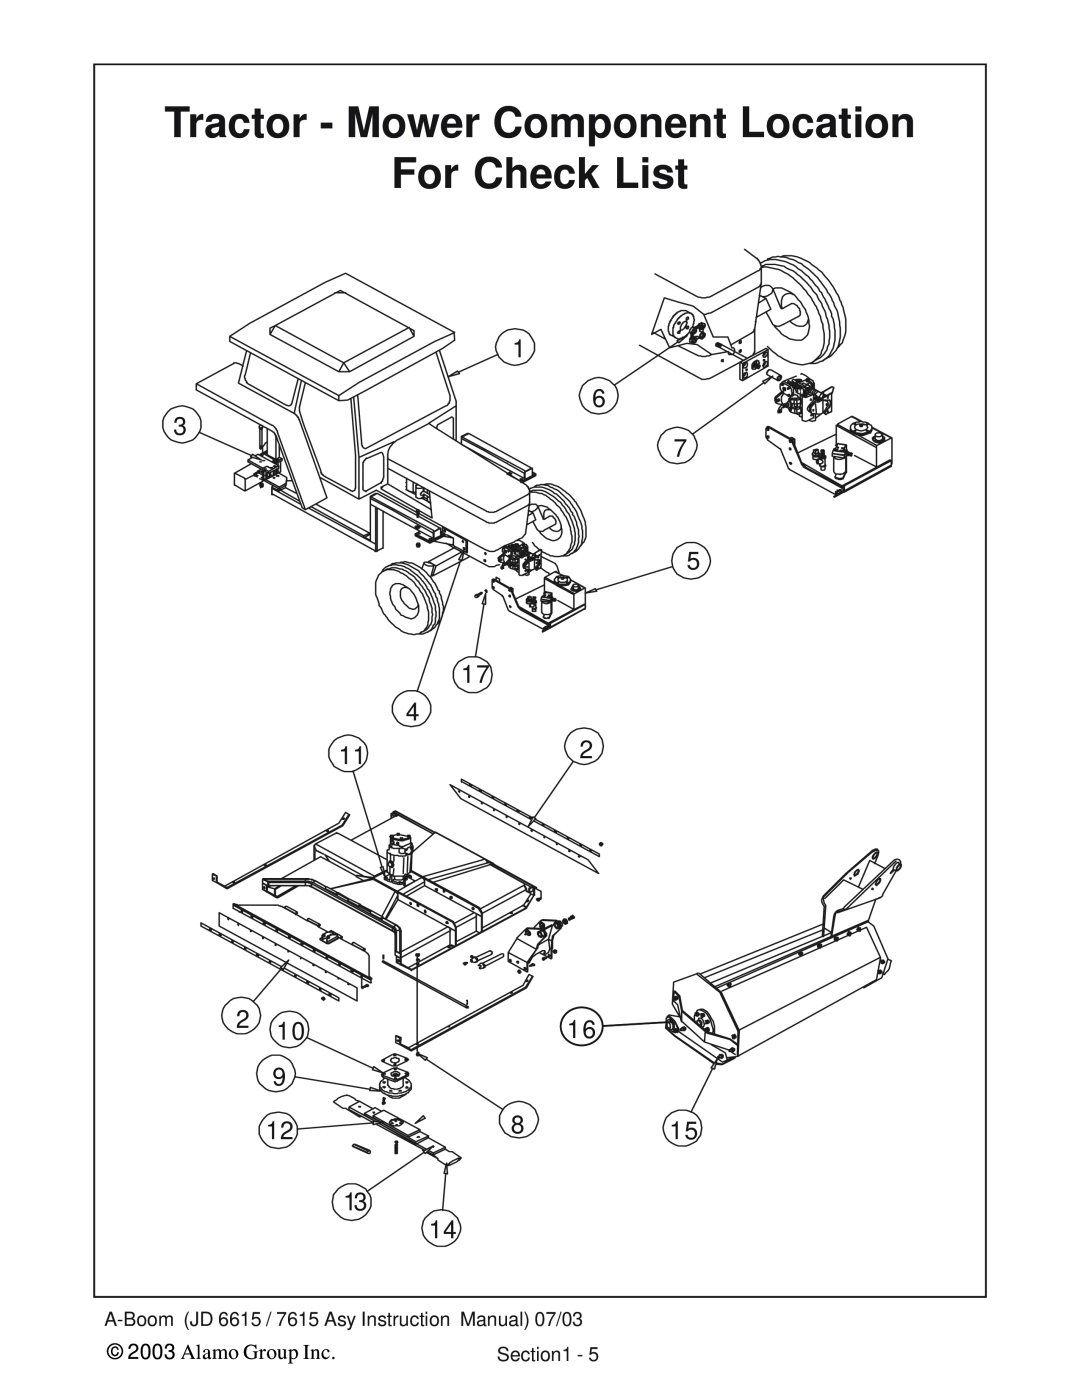 Alamo DSEB-D16/SAS instruction manual Tractor - Mower Component Location, For Check List, Alamo Group Inc 